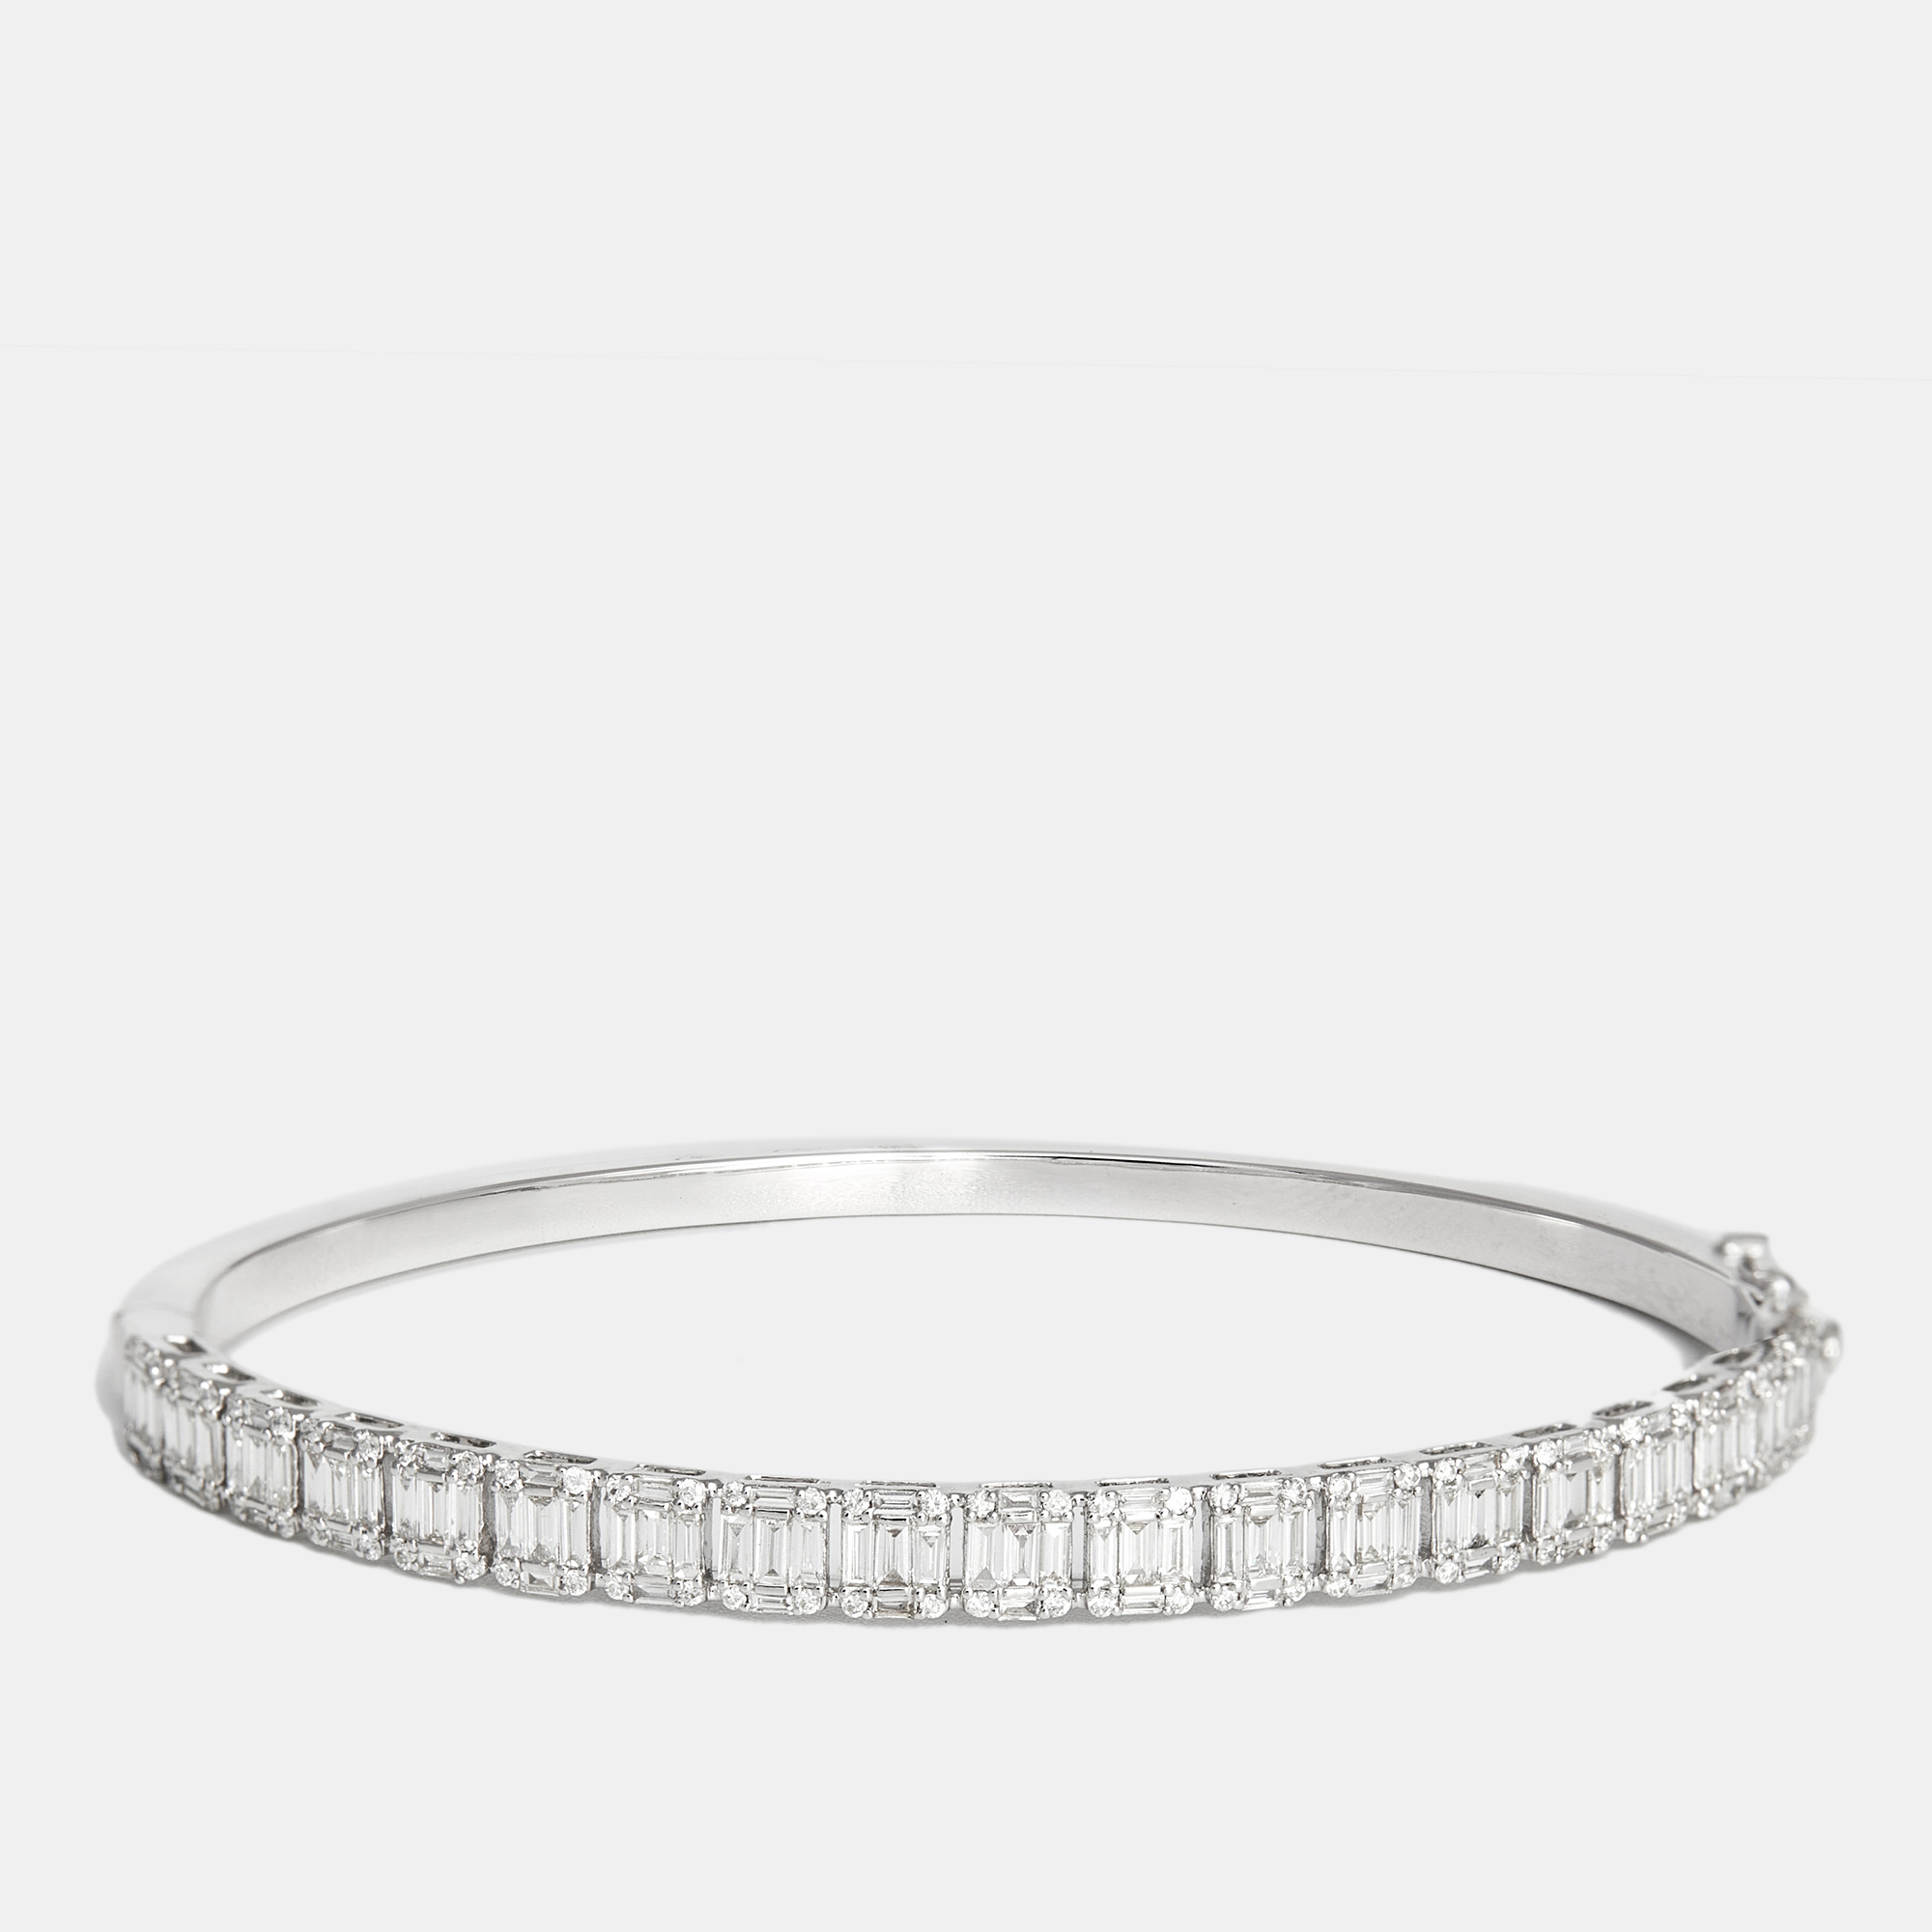 The diamond edit classy baguette and round diamonds 1.67 ct 18k white gold bracelet 16.5